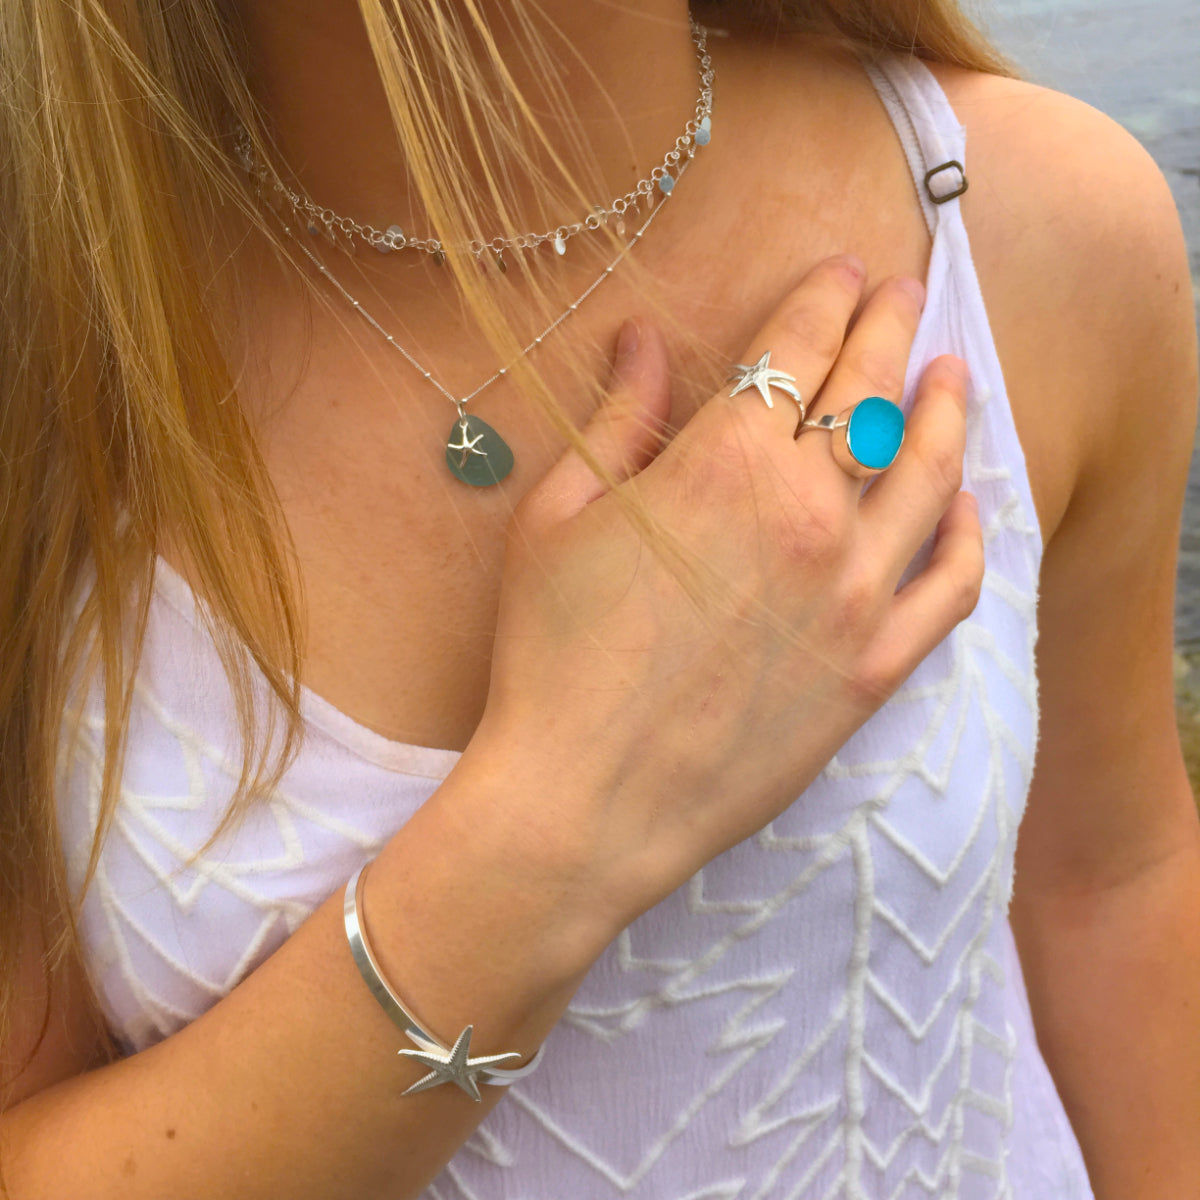 Women wearing sea glass and sea star jewellery by Mornington Sea Glass